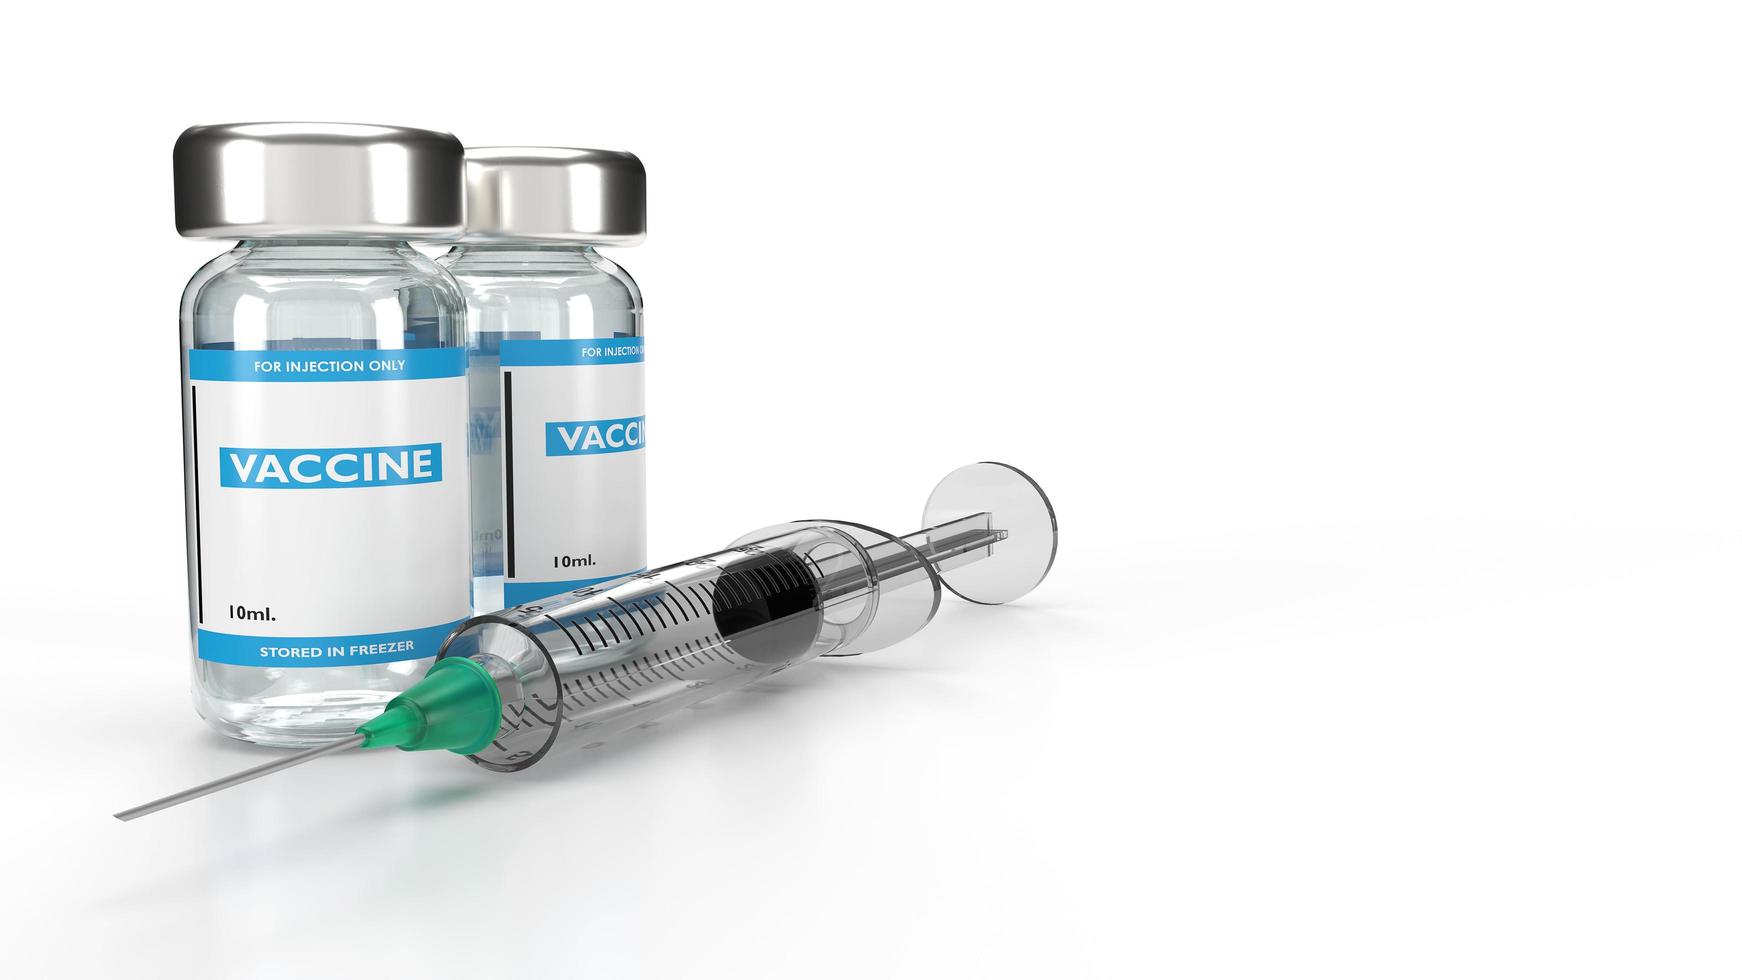 Vaccine bottle and syringe on white background, 3D rendering illustration photo